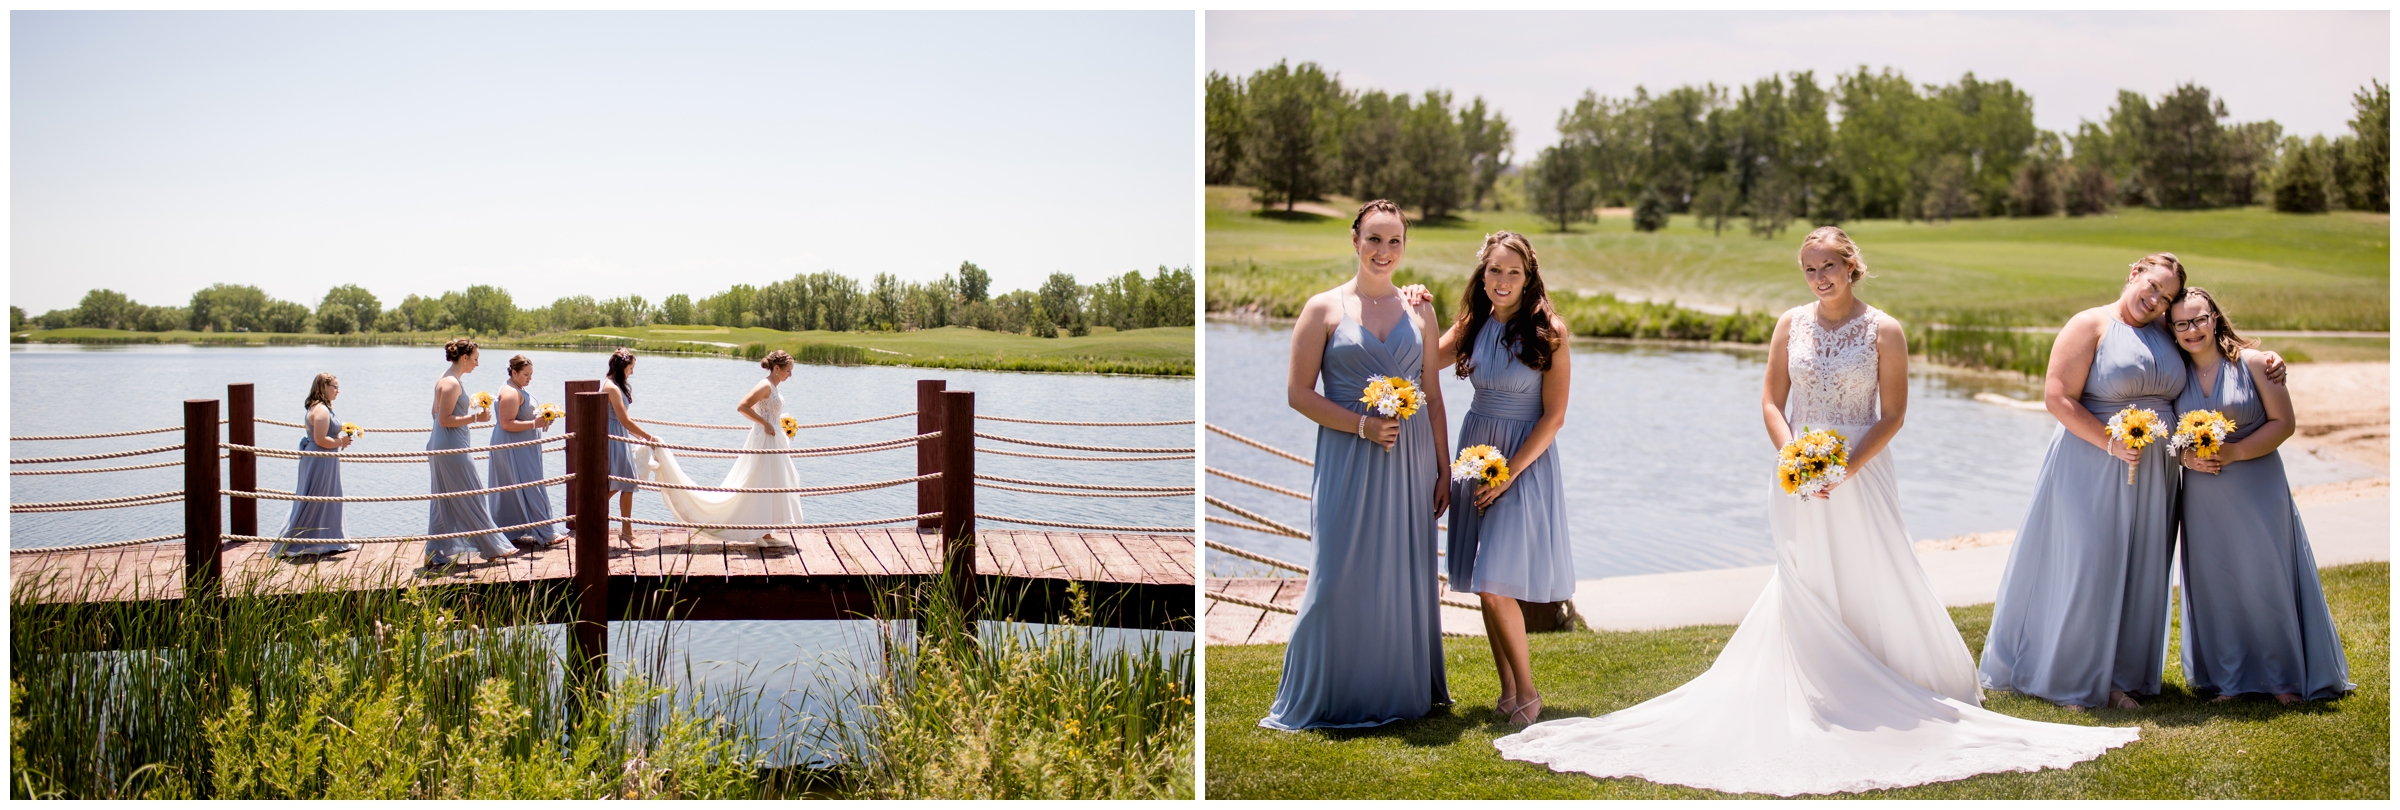 bride and bridesmaids walking on dock during summer wedding at Pelican Lakes Golf Course Colorado 